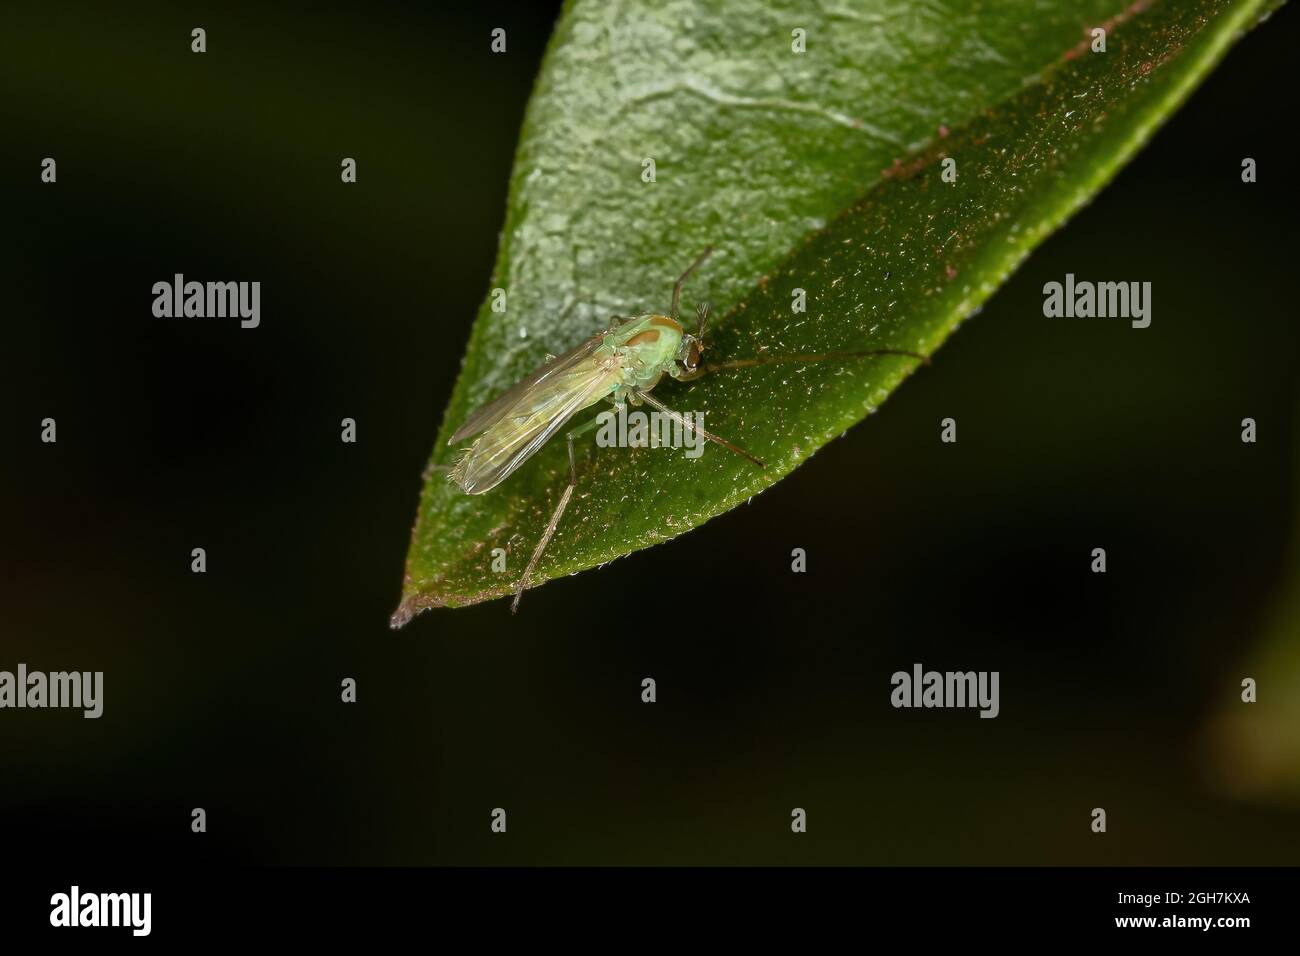 Adult Non-biting Midge of the Family Chironomidae Stock Photo